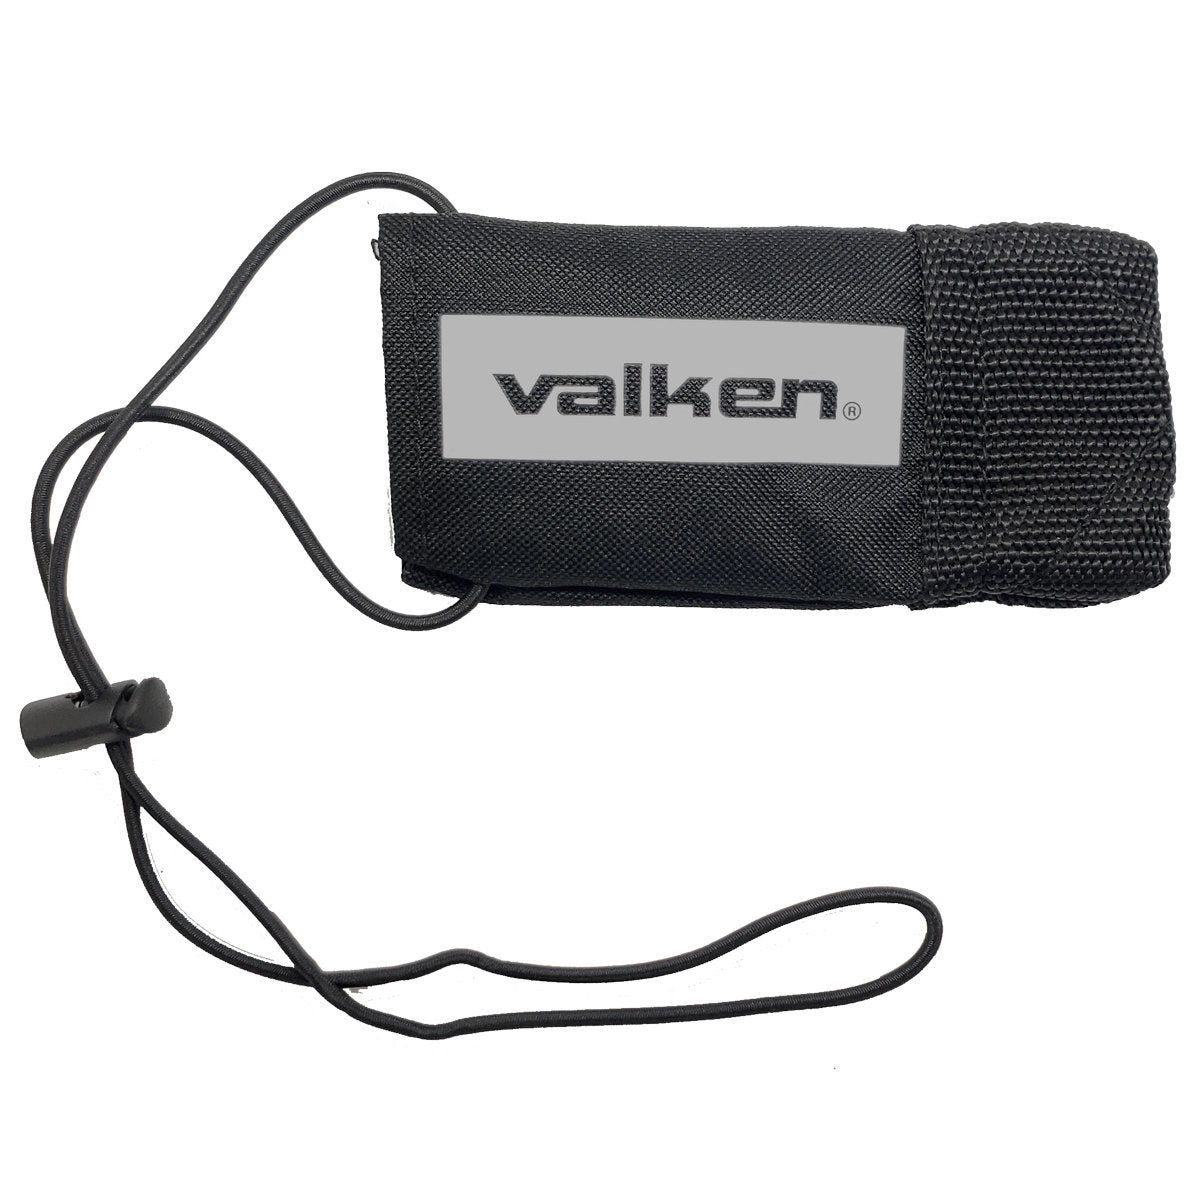 Valken Kilo BLK Player Package